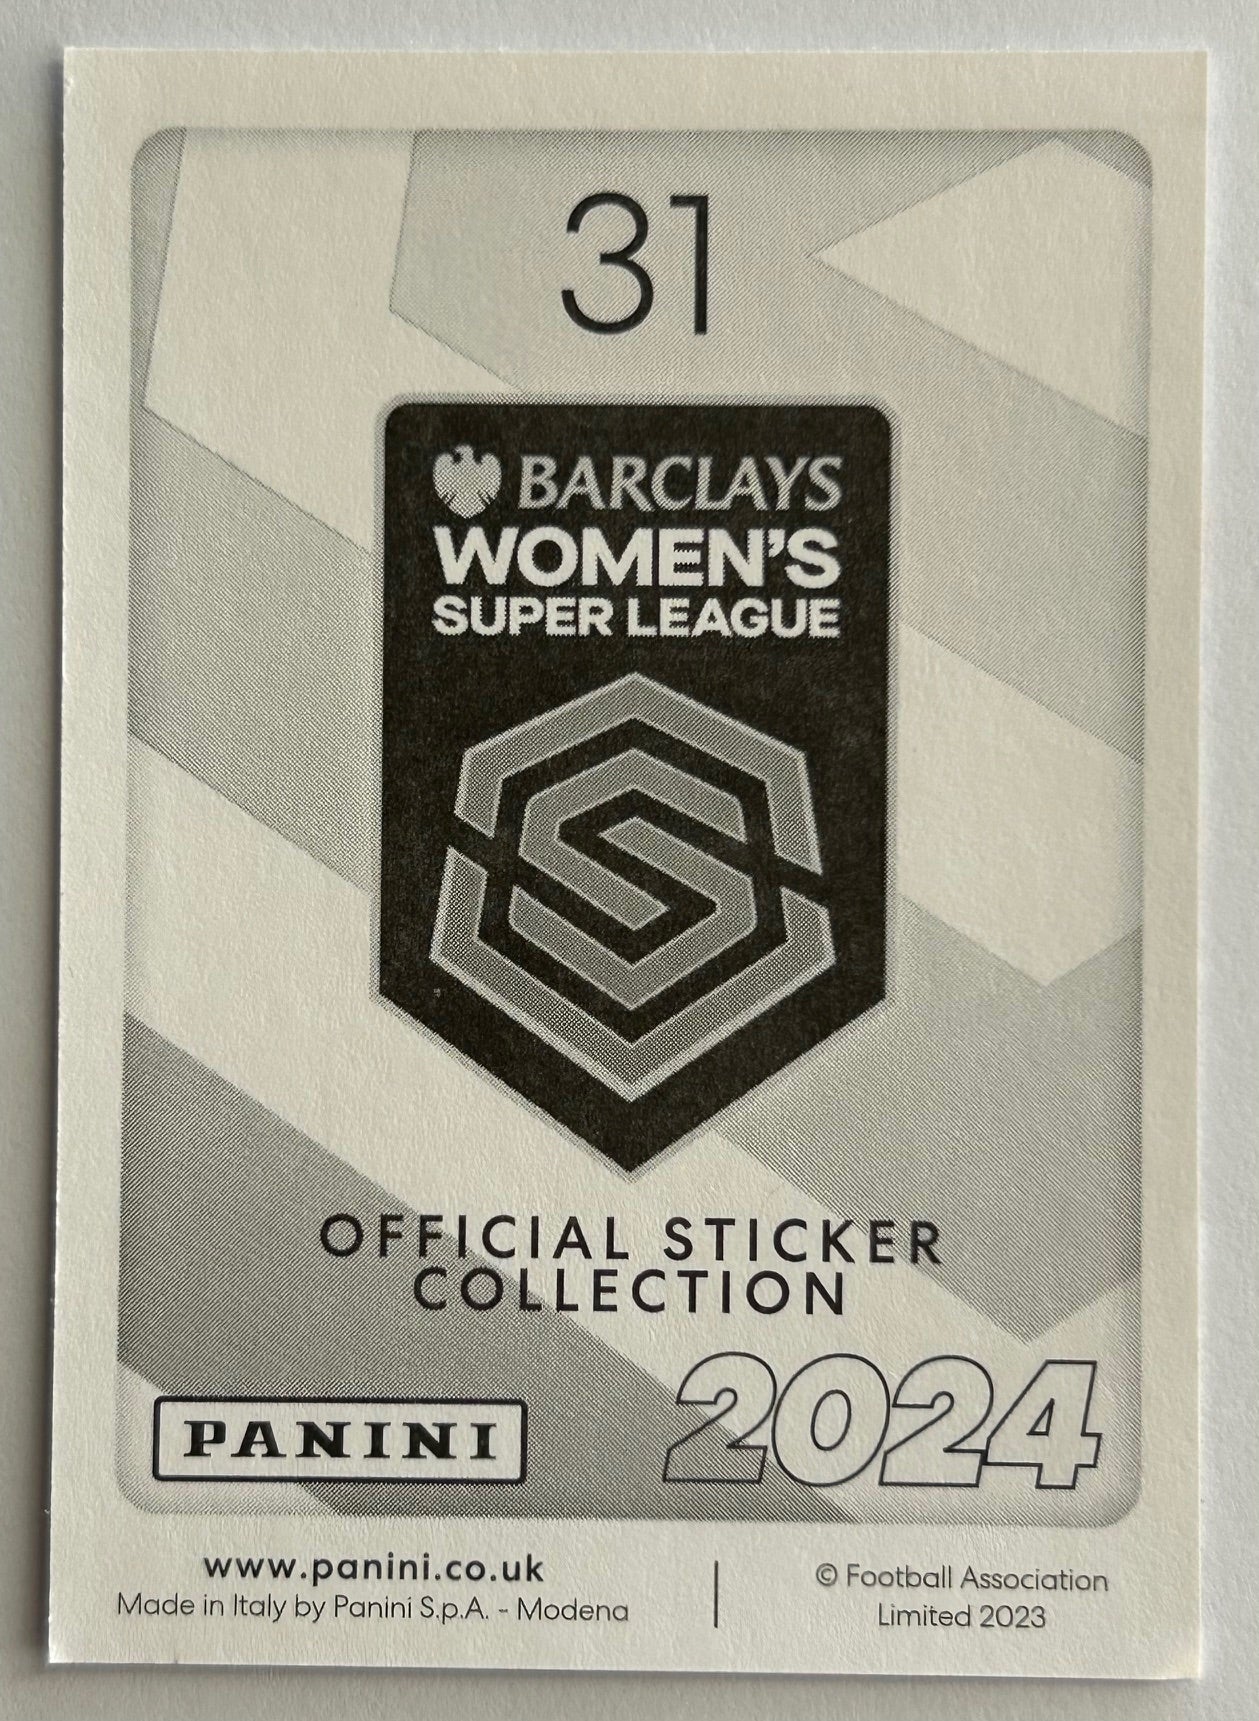 Panini Barclays Women's Super League 2024 - Single SQUAD SNAPSHOT (CHELSEA & EVERTON) Stickers (#26 - #31)